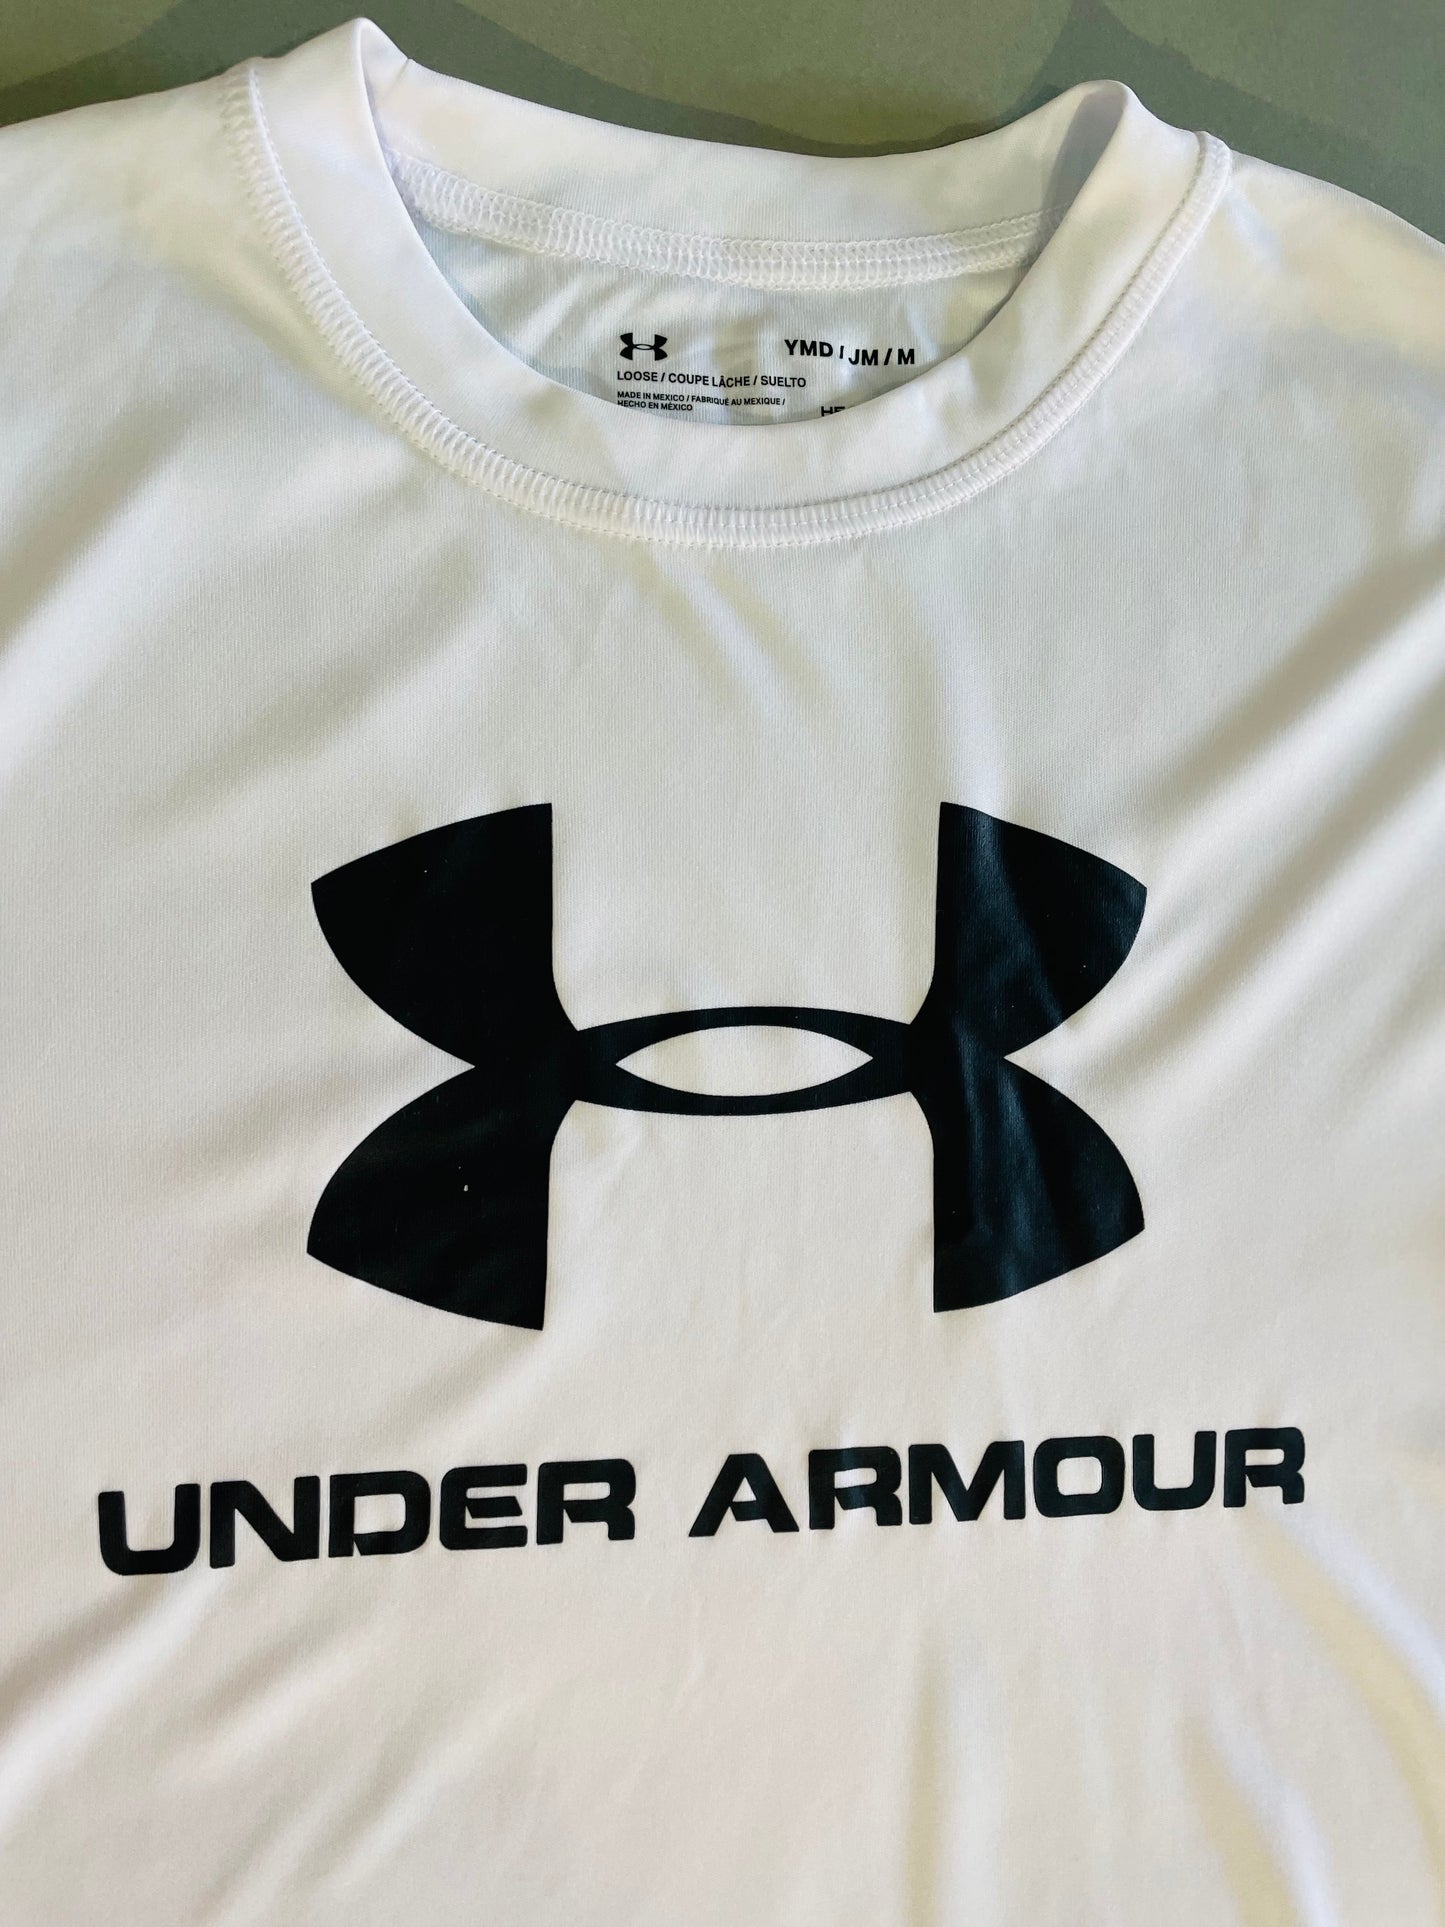 Under armor kids shirt